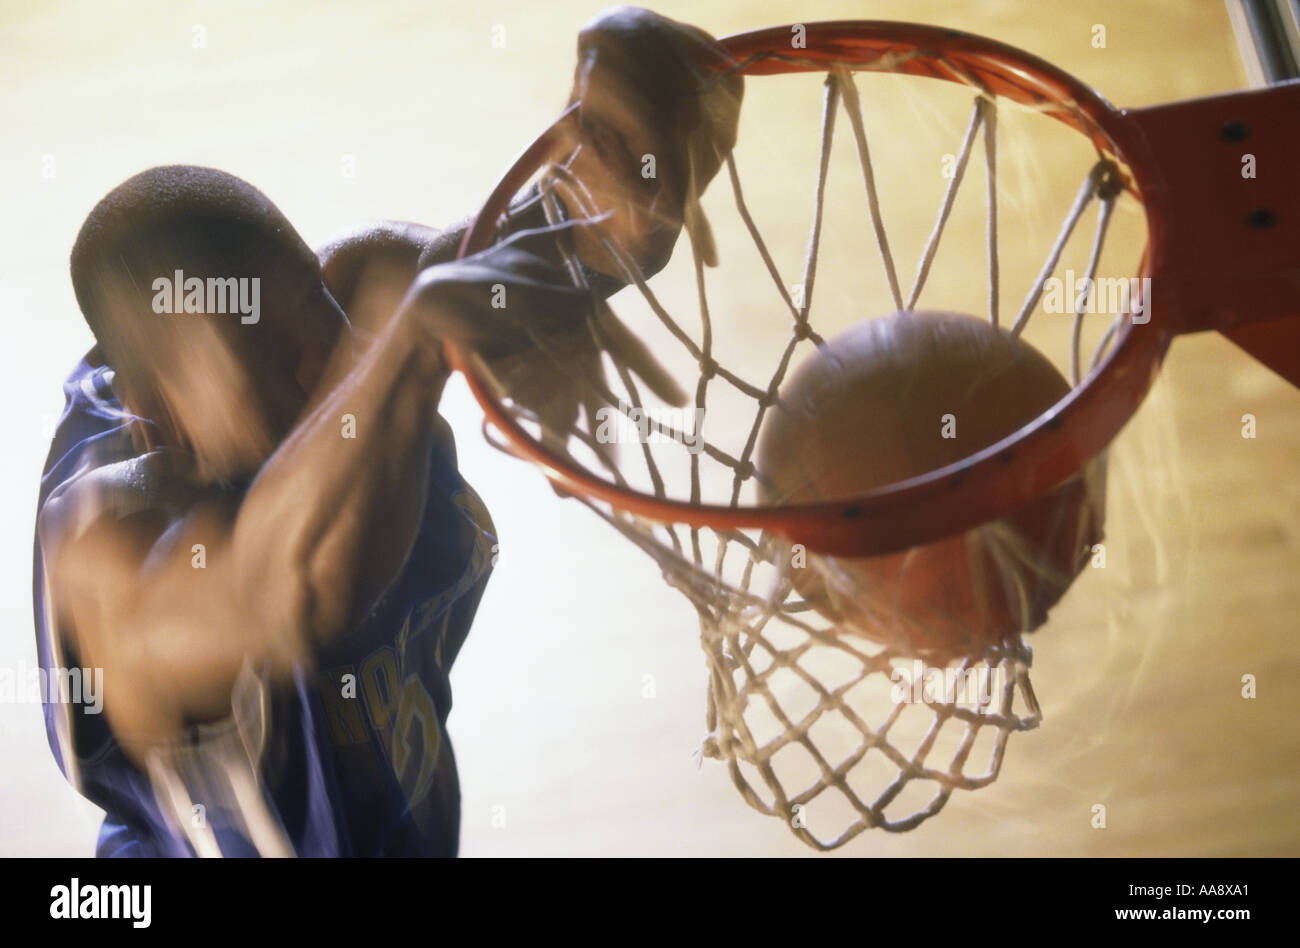 Basketball player slam dunking a ball Stock Photo